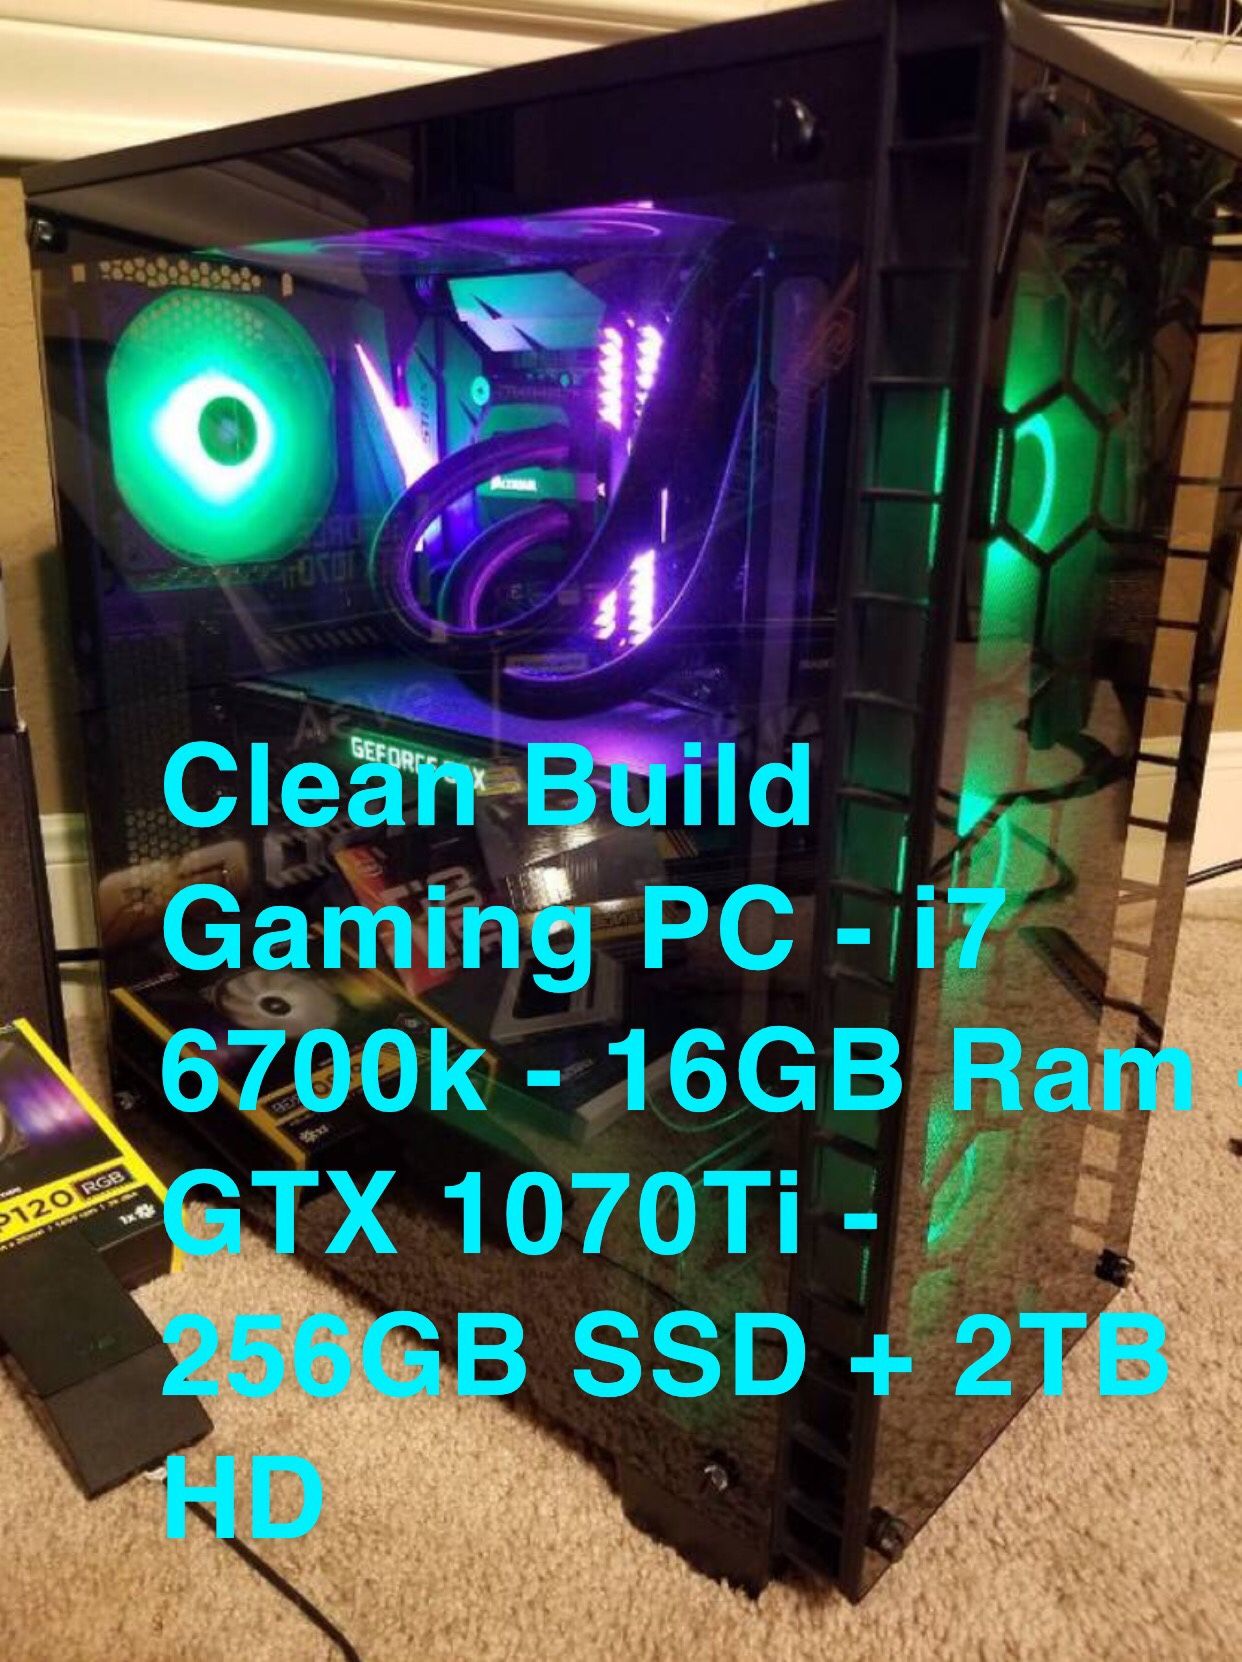 Clean Build RGB Gaming PC - i7 6700k - 16GB Ram - GTX 1070Ti - 256GB SSD + 2TB HD - Windows 10 - Free New RGB Keyboard Mouse